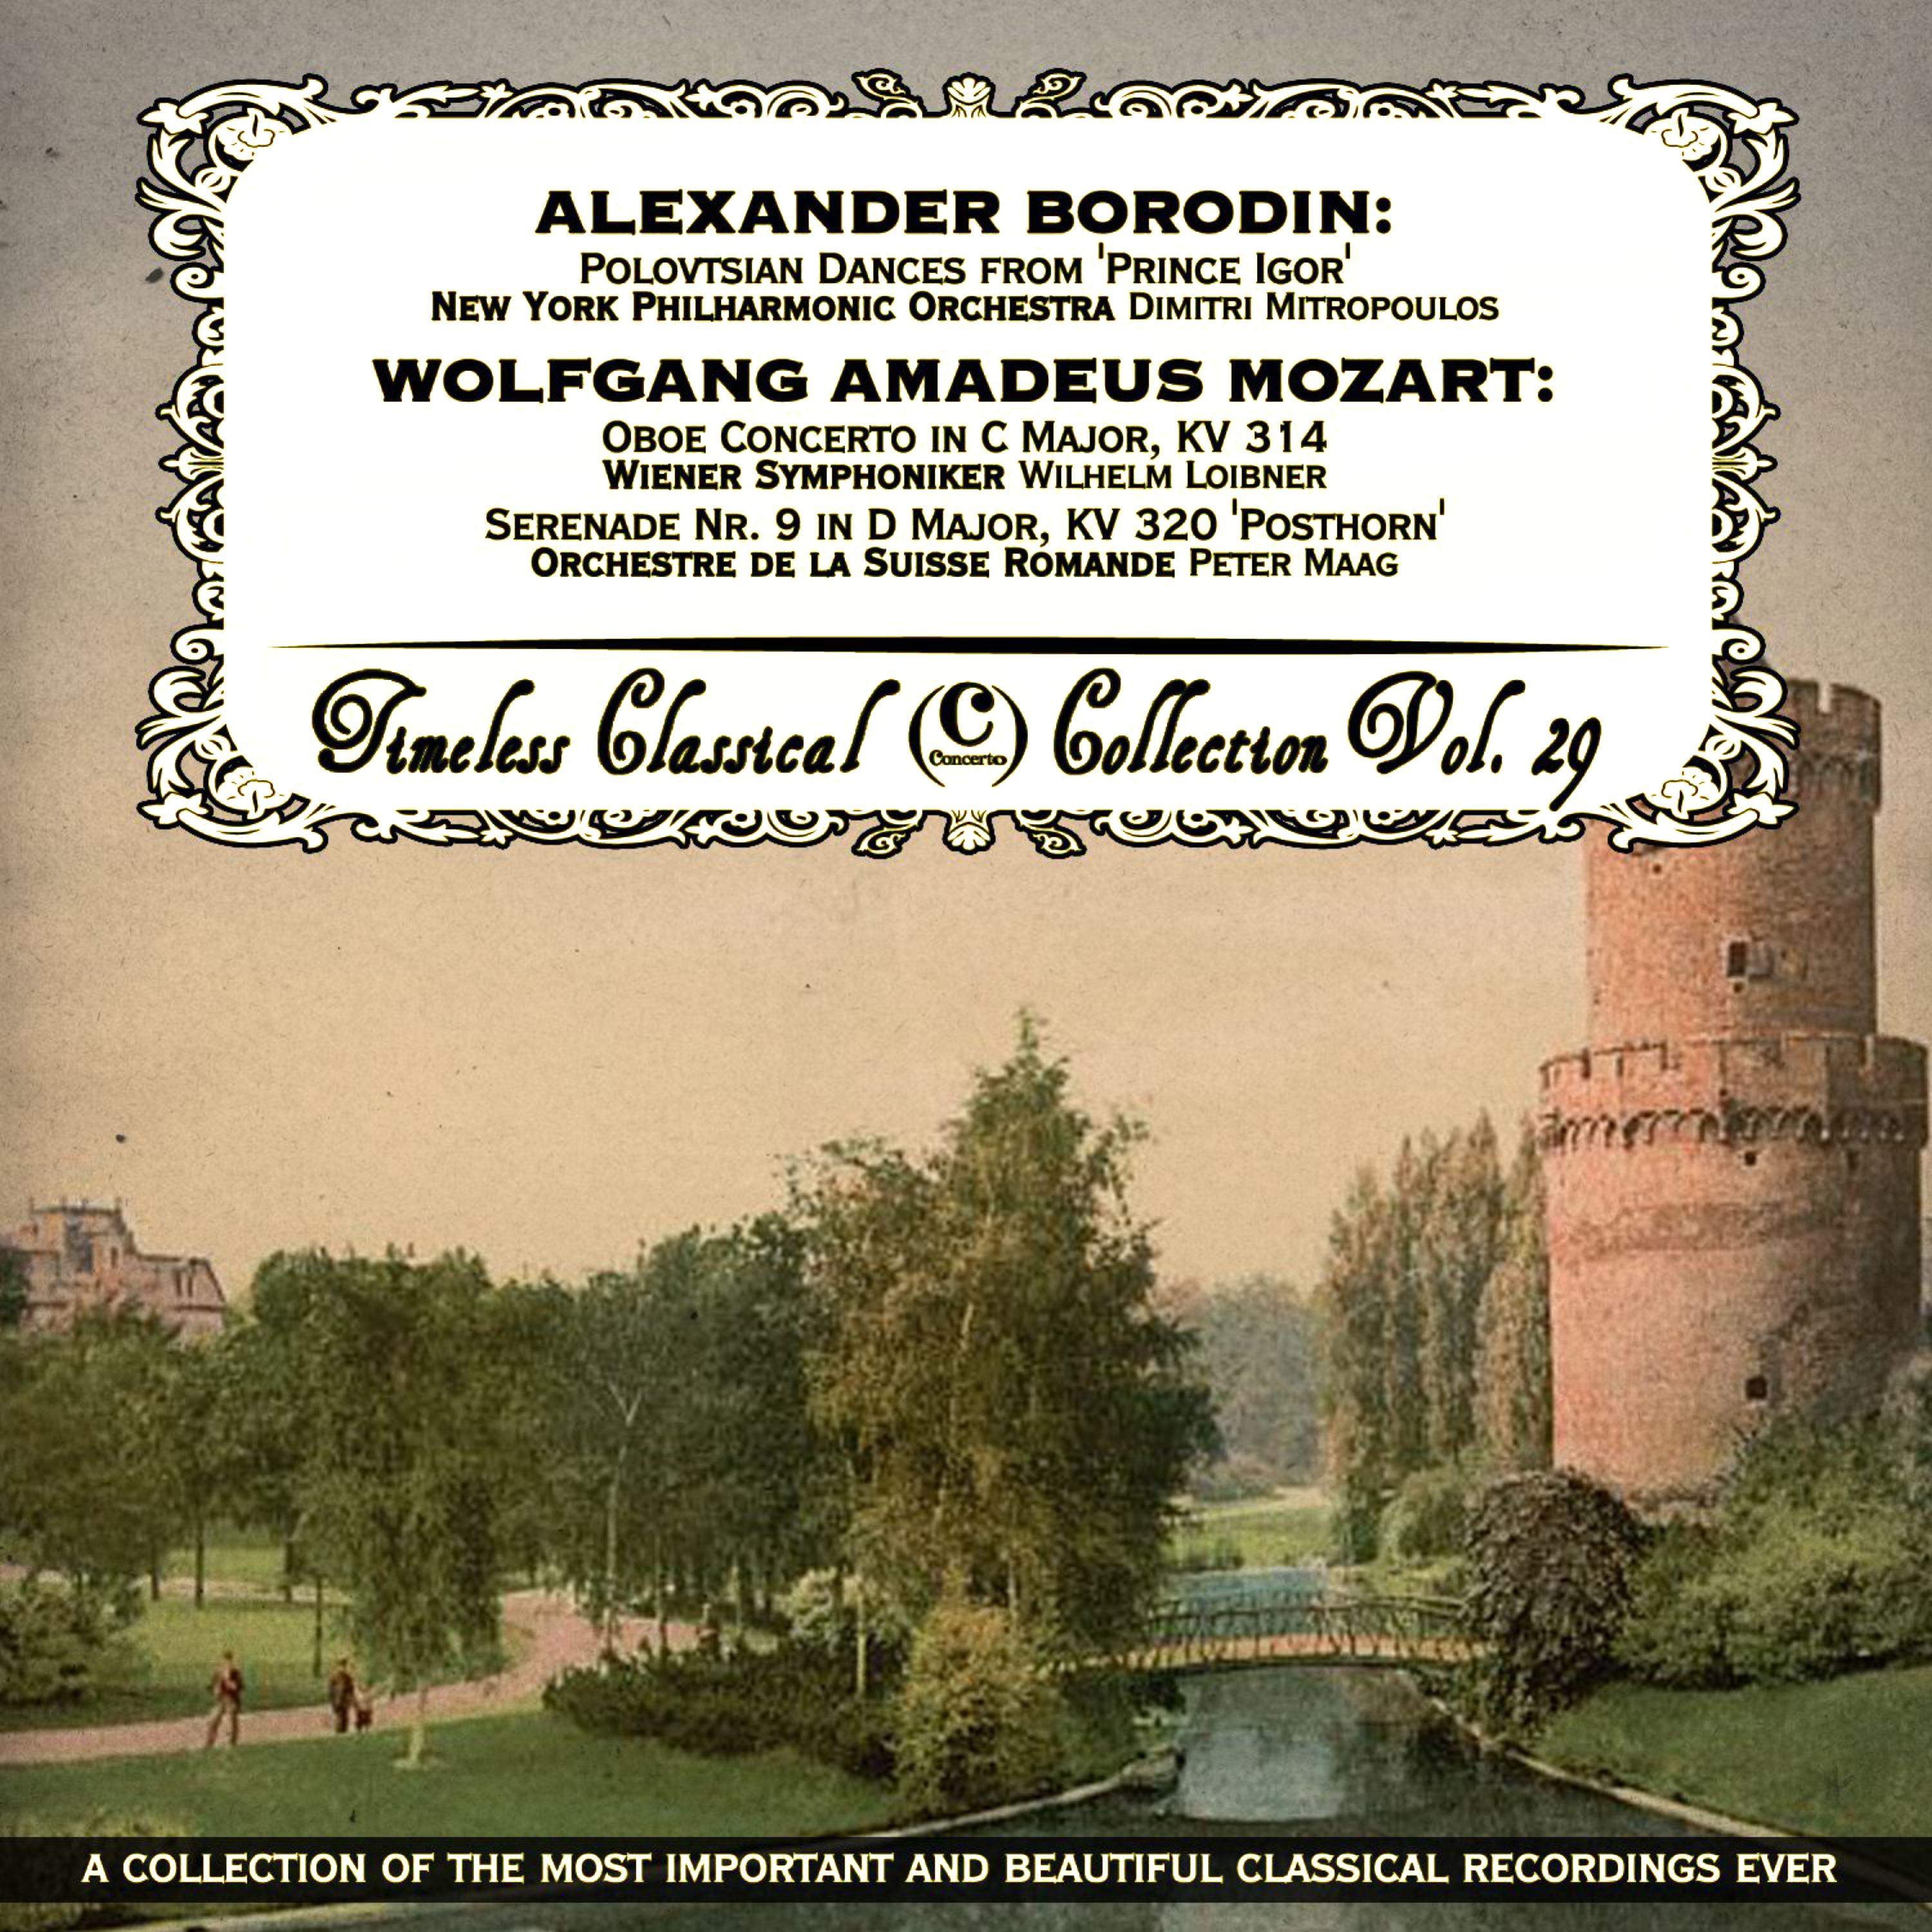 Posthorn, Serenade No. 9 in D Major, KV 320: III. Concertante - Andante grazioso